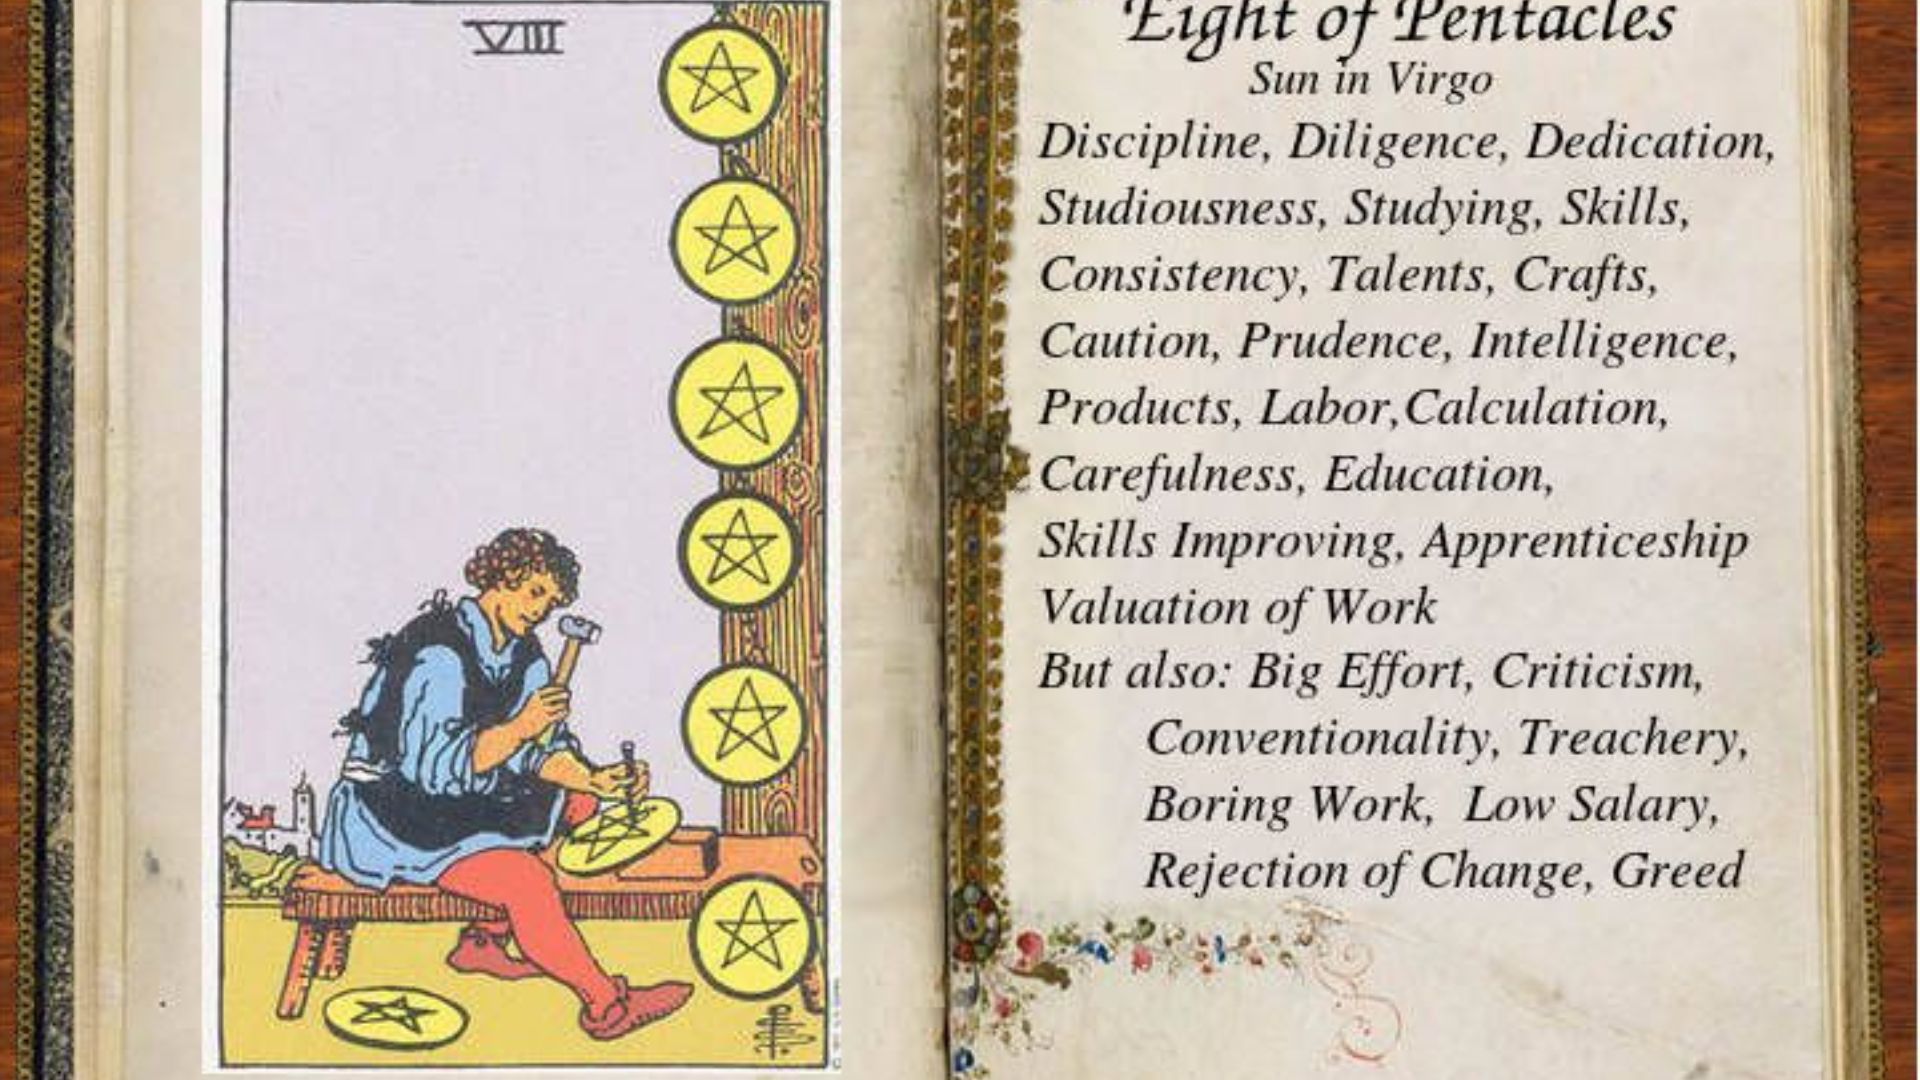 8 Of Pentacles Tarot Card With Description